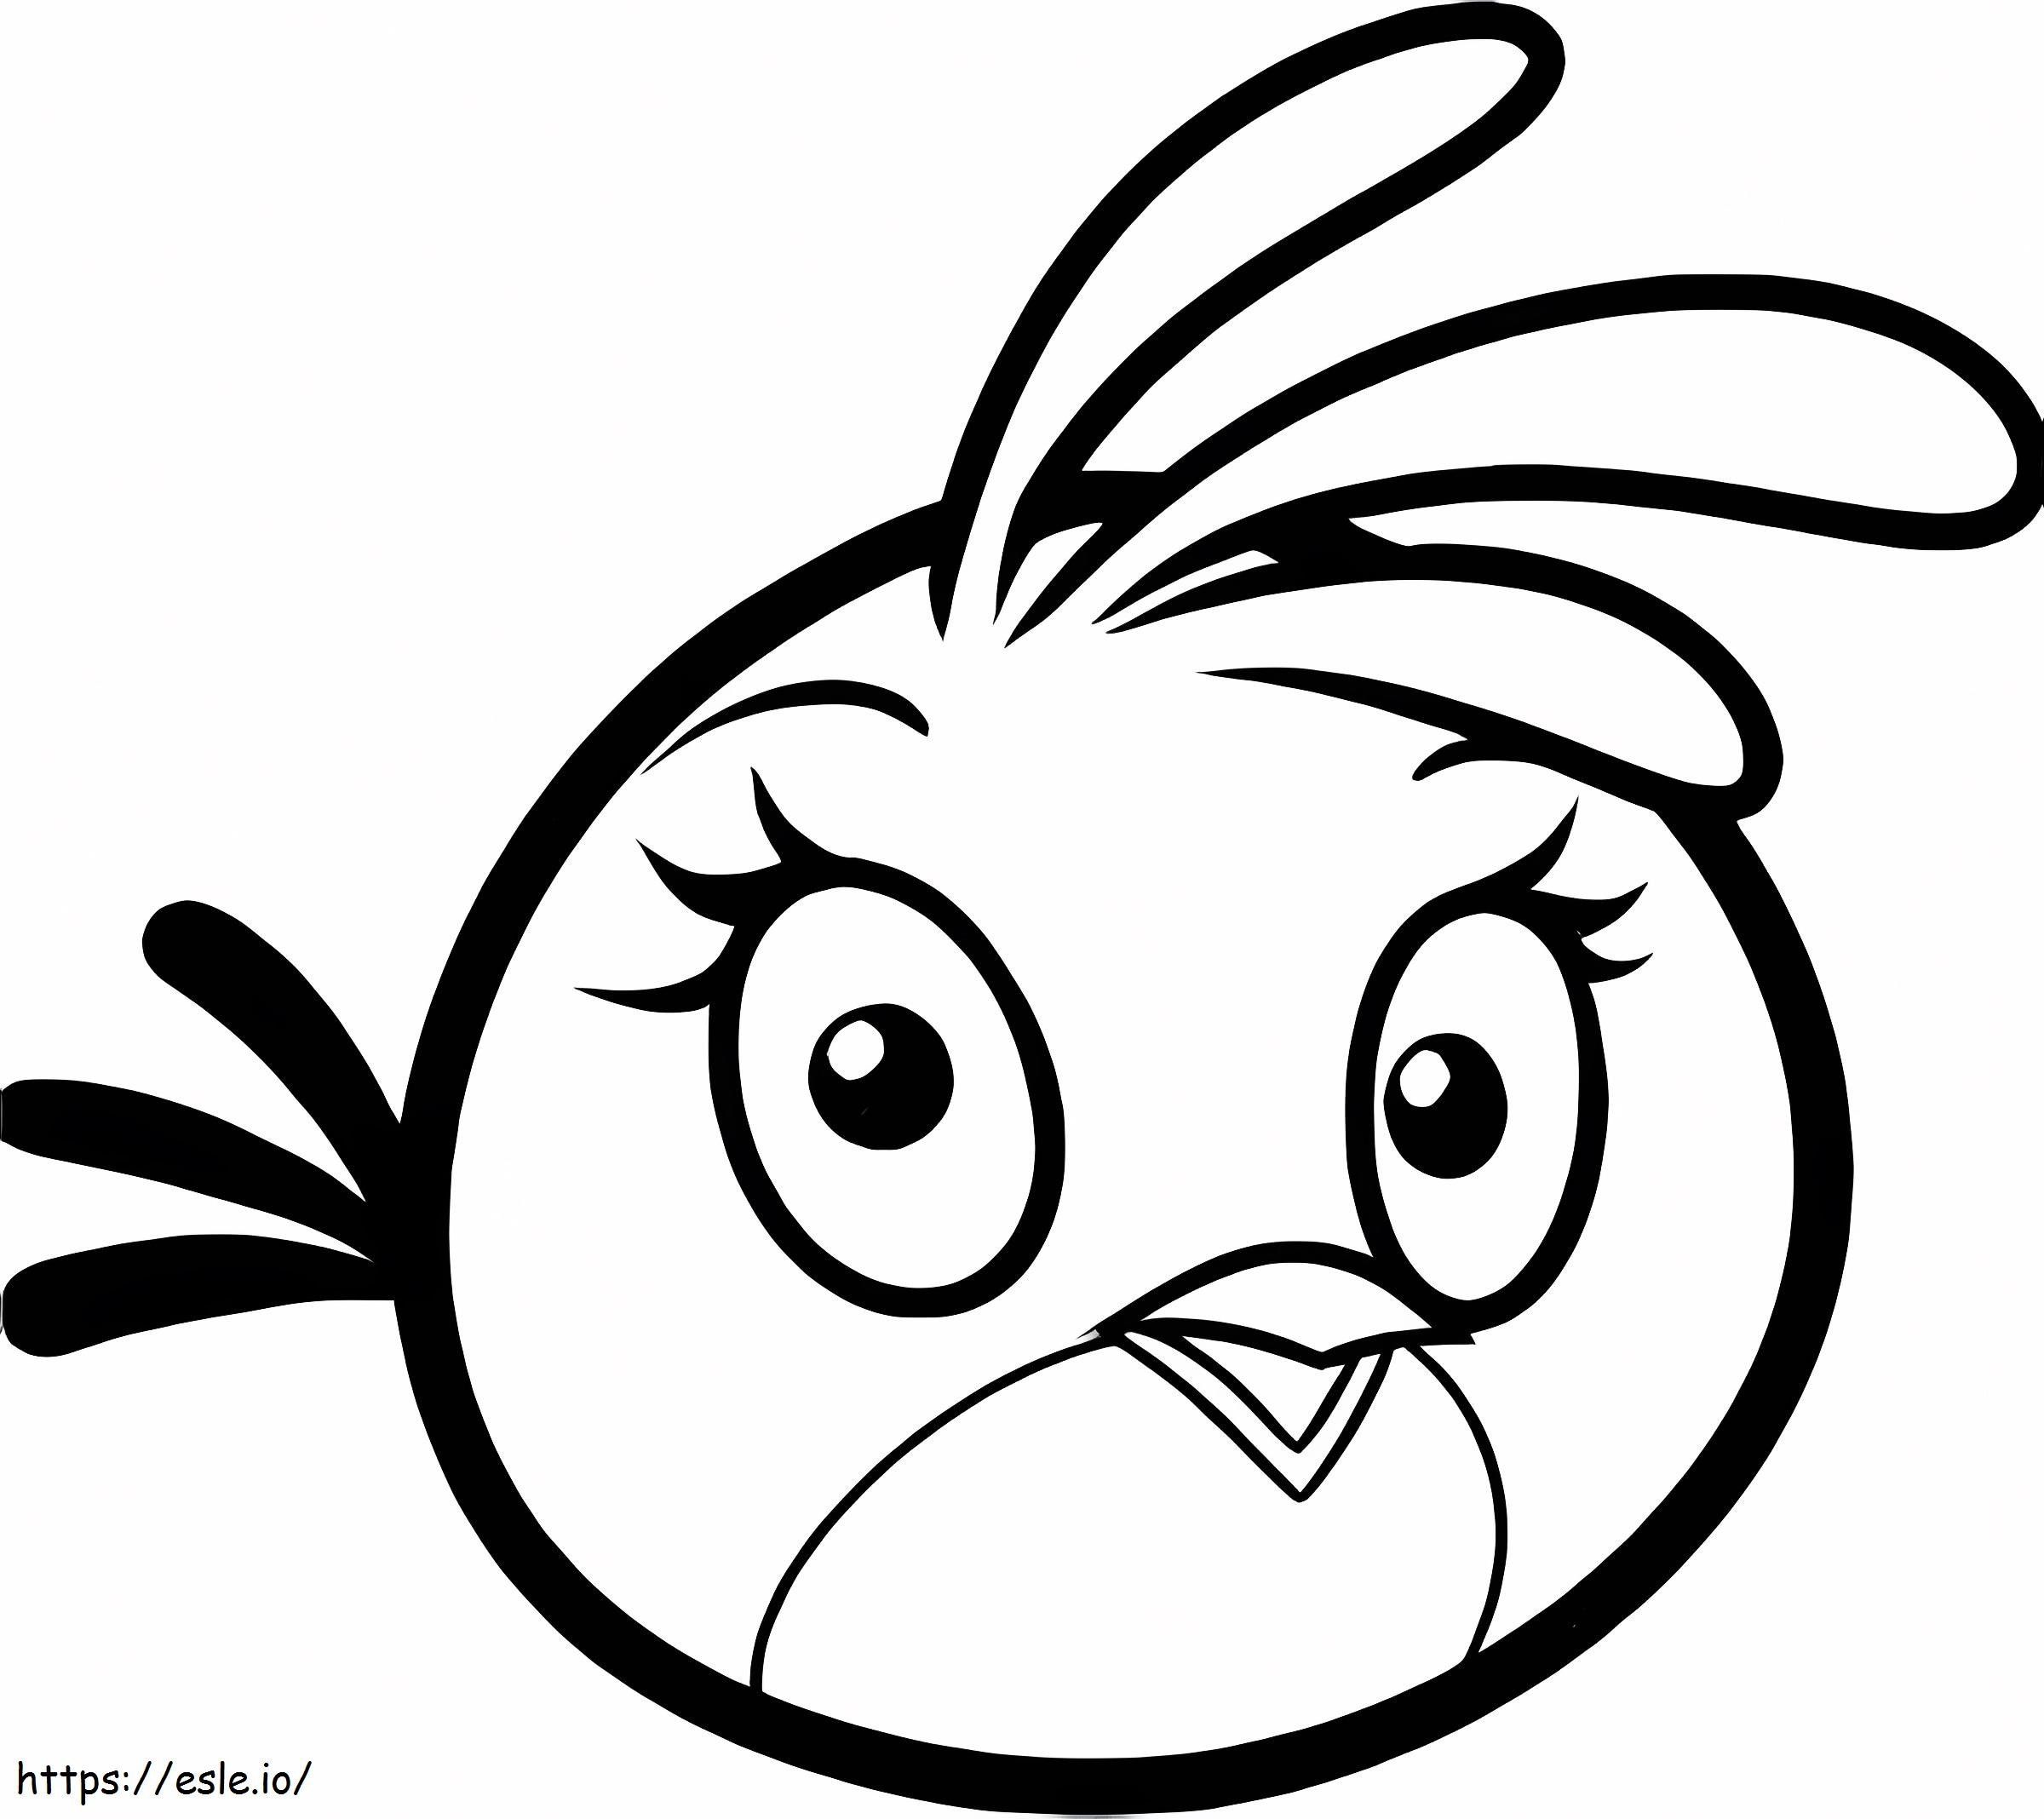 Güzel Angry Birds Stella boyama